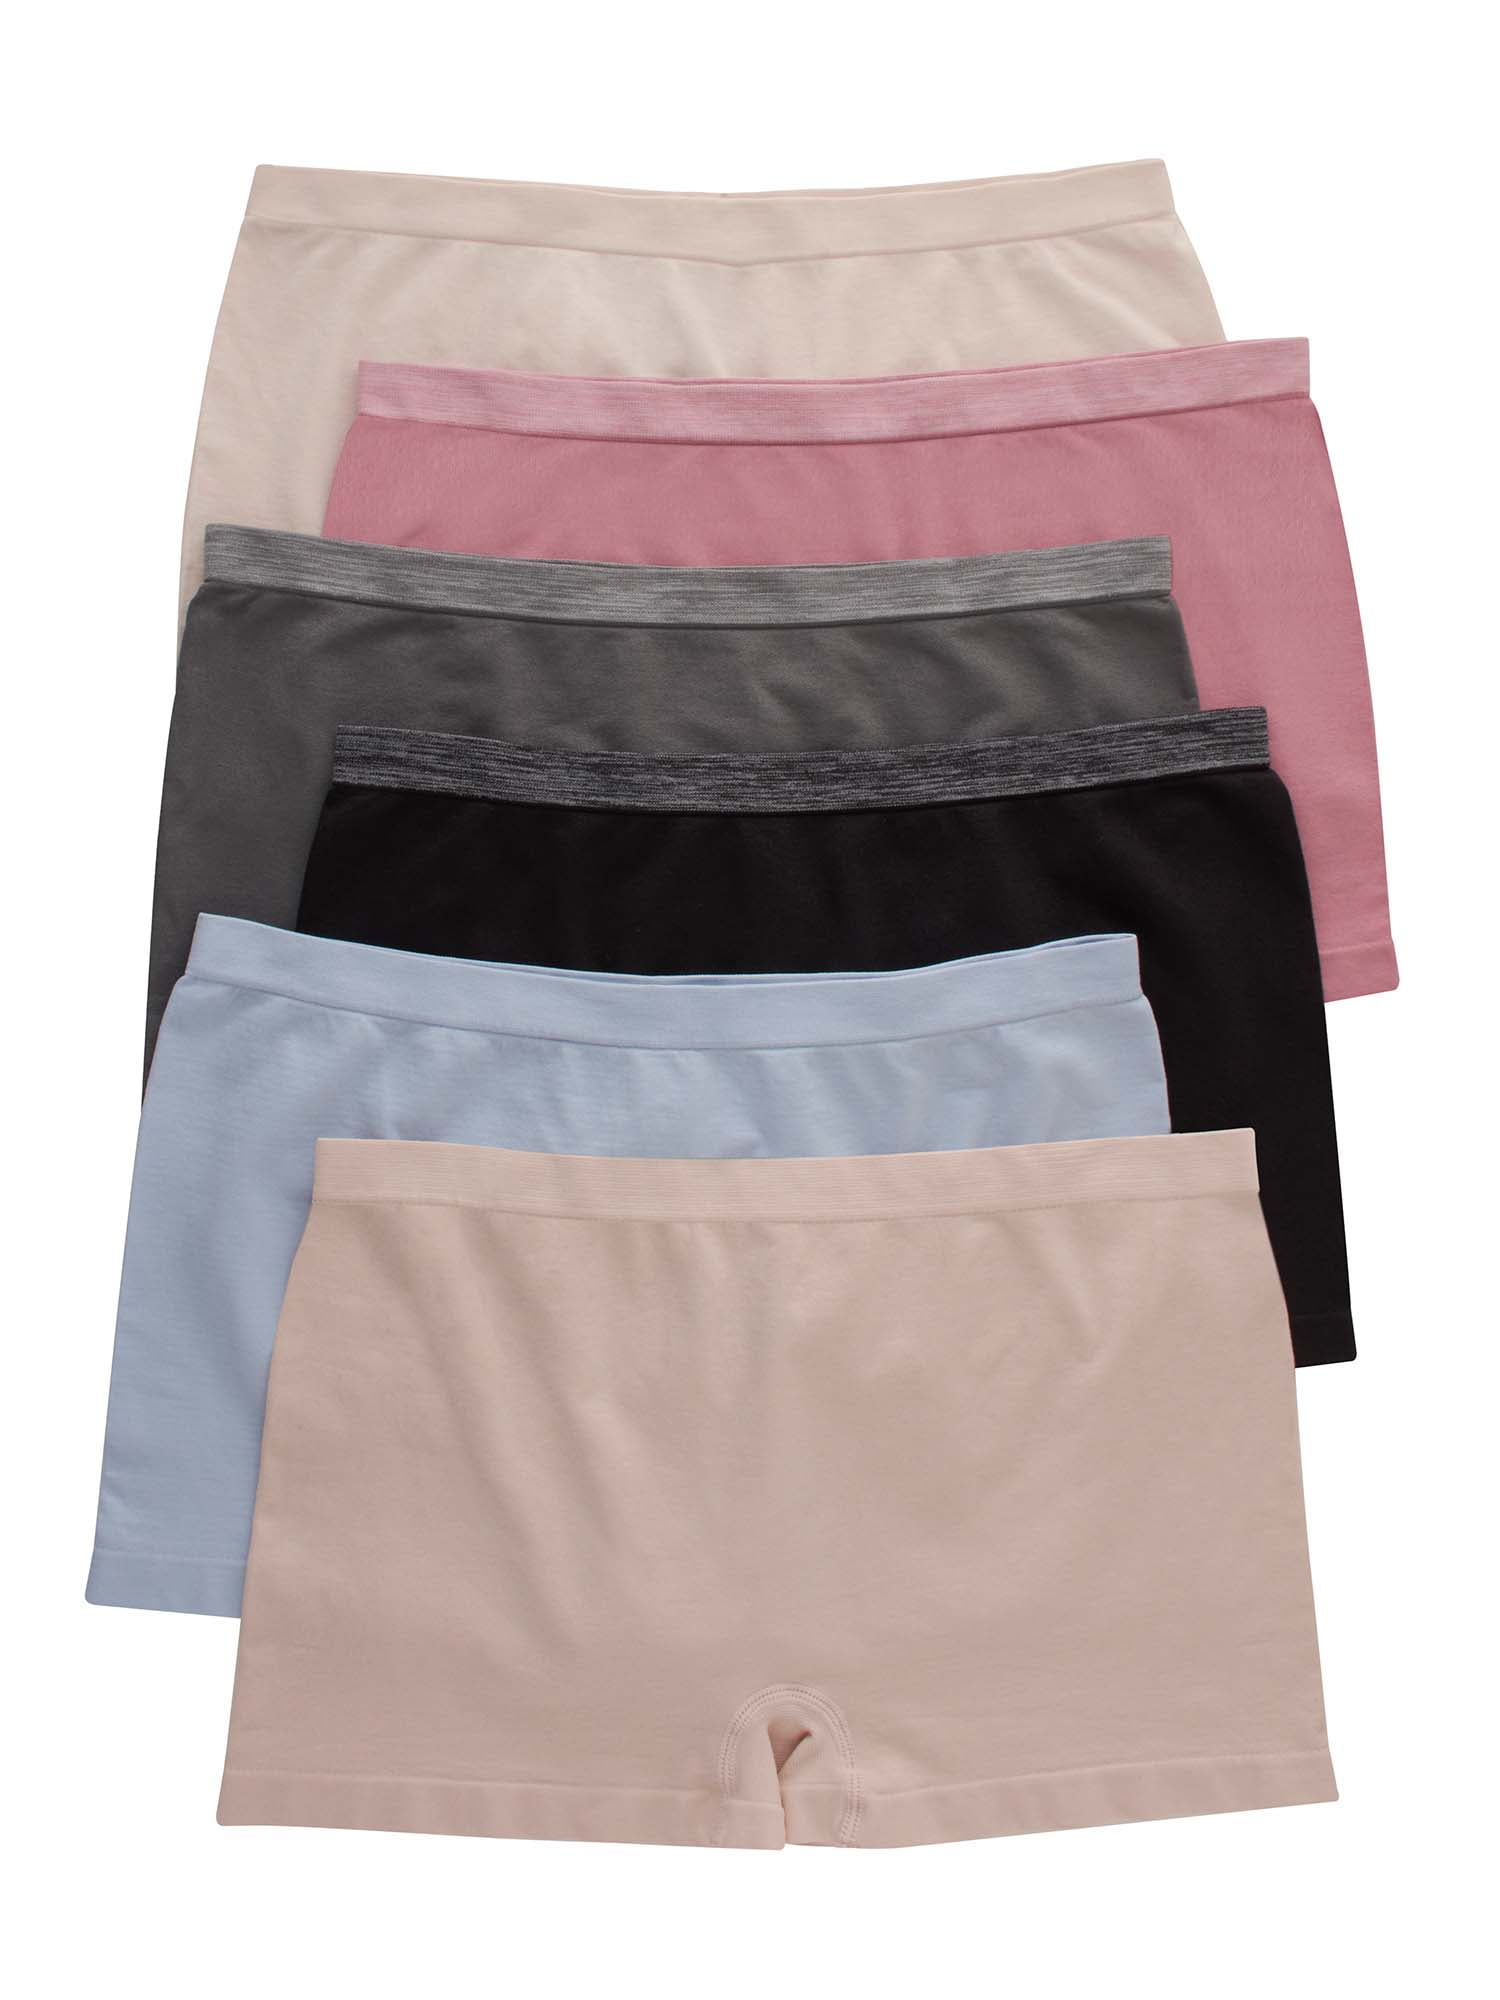 LAVRA Women's Plus Size Boyshorts Seamless Booty Shorts Underwear 